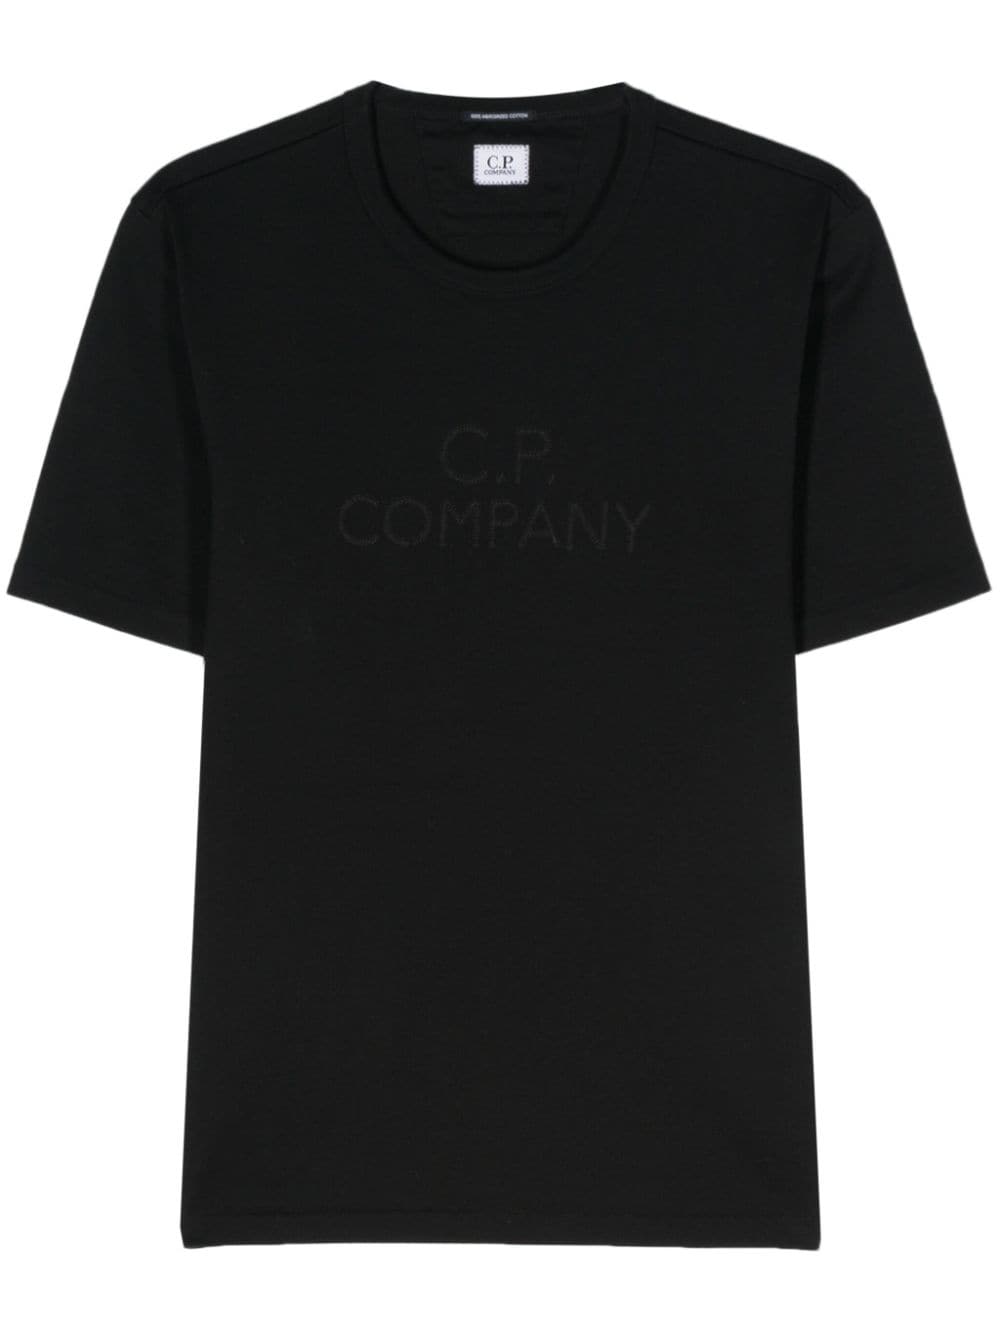 C.P. Company embroidered logo cotton T-shirt - Black von C.P. Company